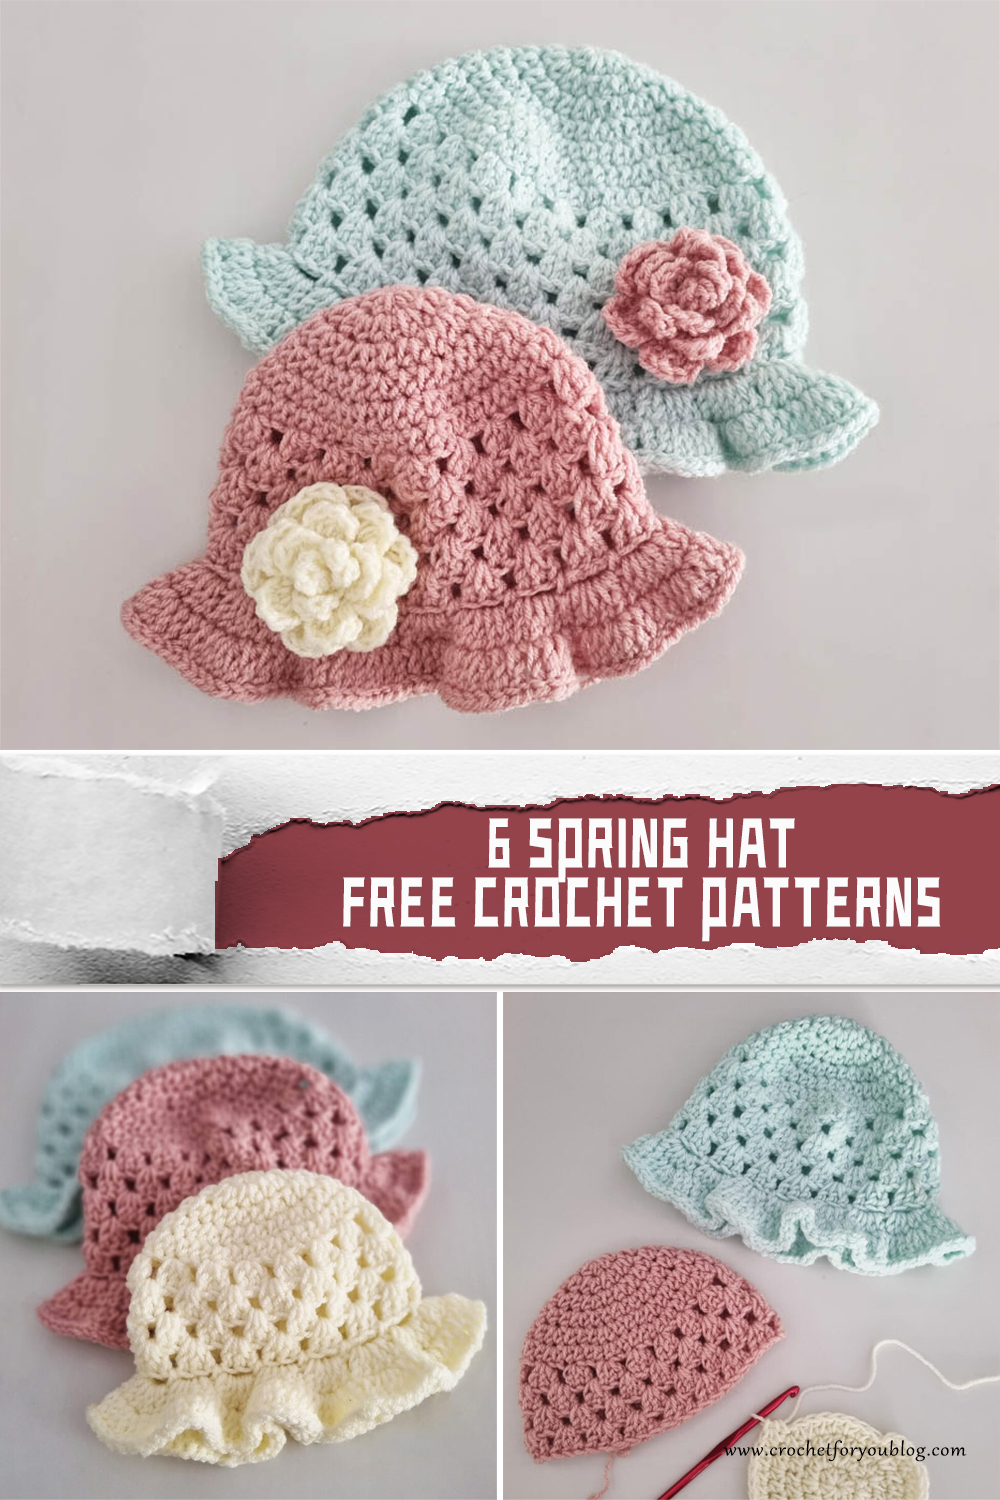 6 Spring Hat Crochet Patterns - FREE - iGOODideas.com